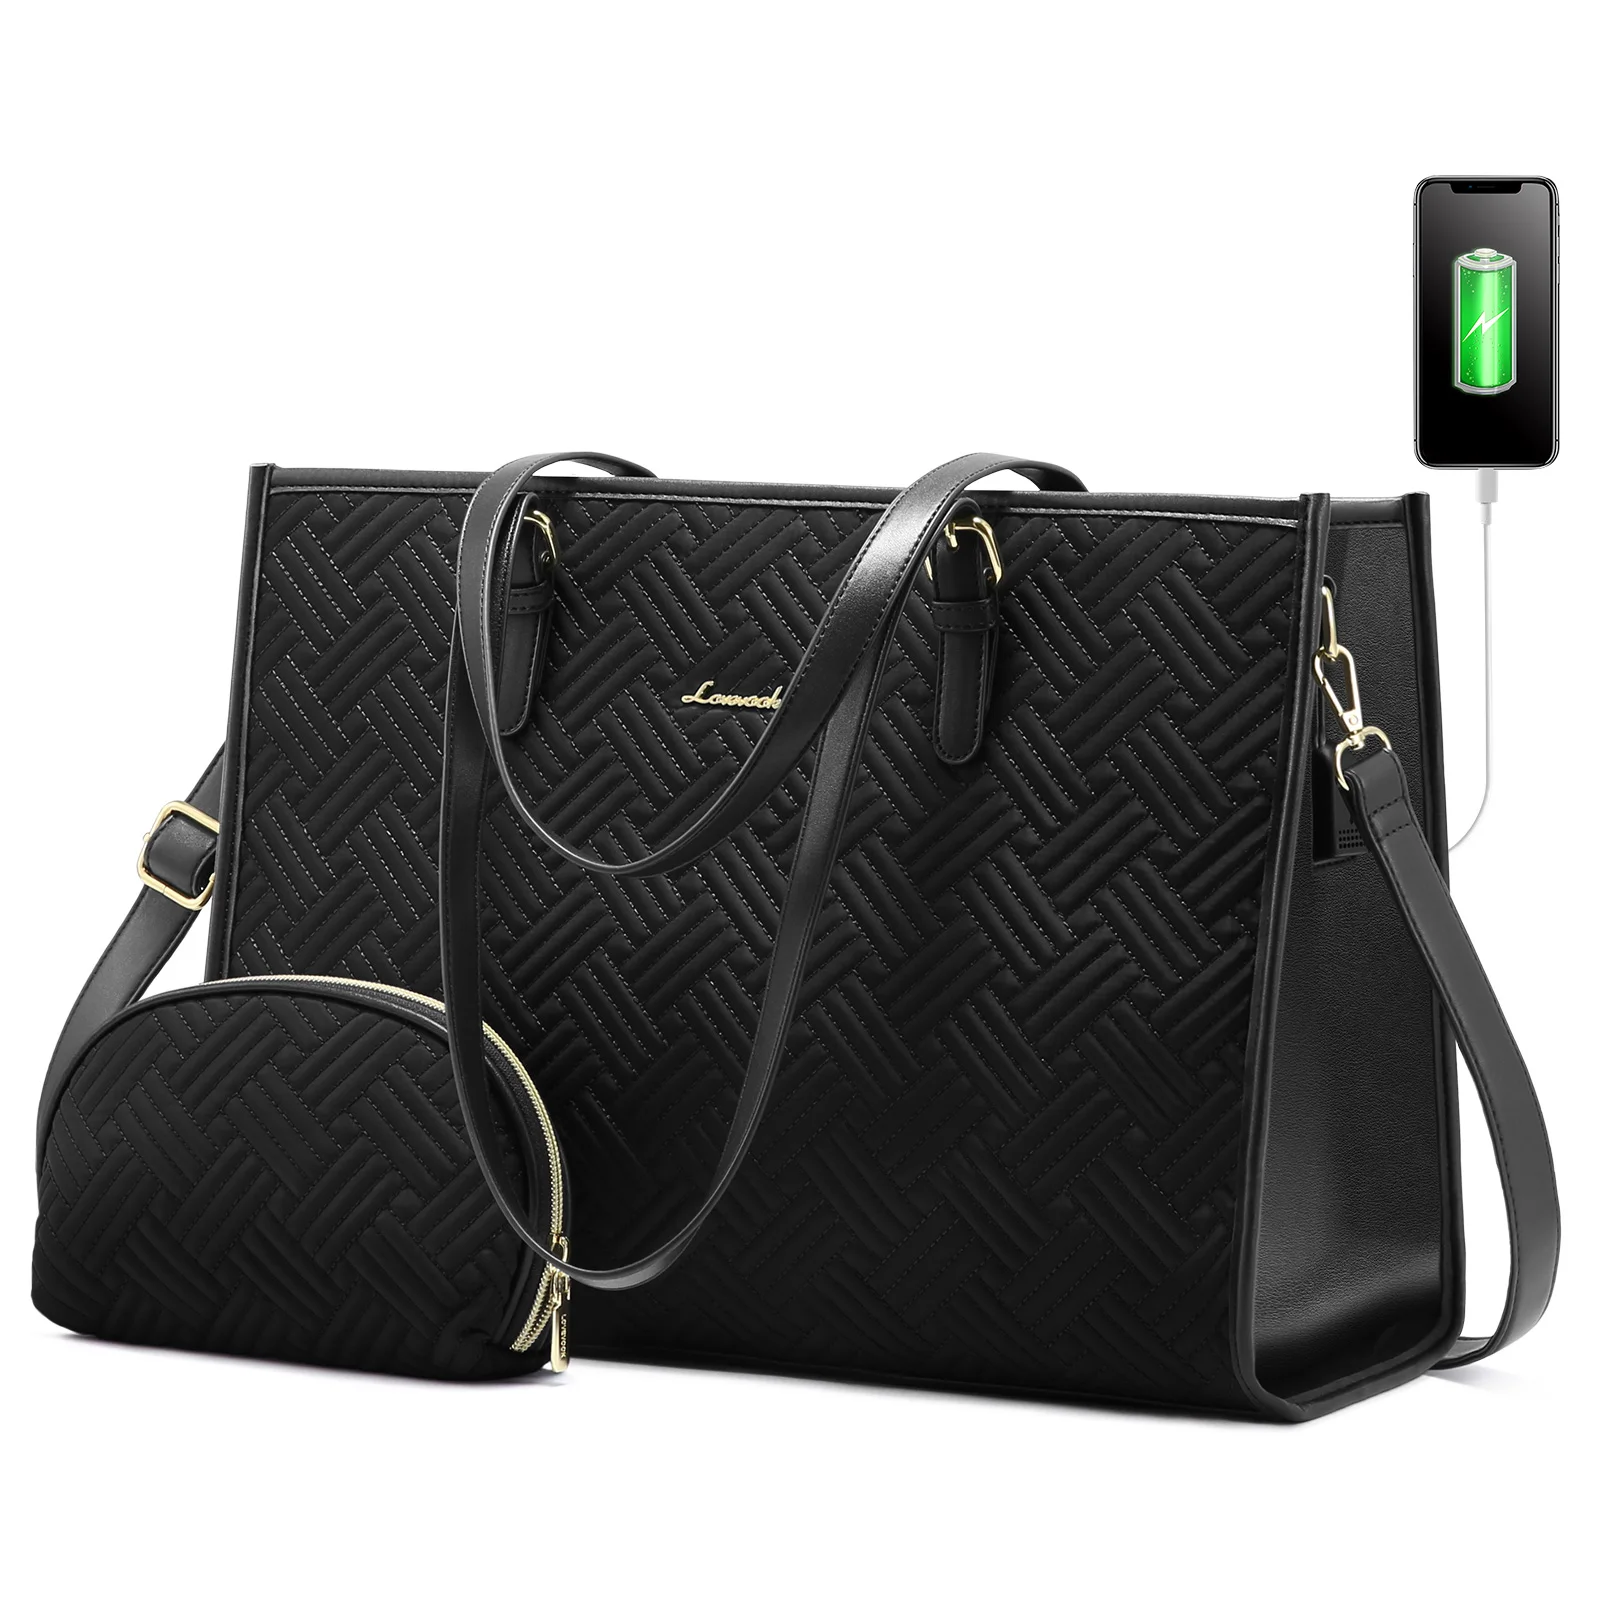 

LOVEVOOK PU+Nylon 2pcs 15.6 inch Computer Tote Handbag Ladies Shoulder Bag Purse Business Work Briefcase Laptop Bag for Women